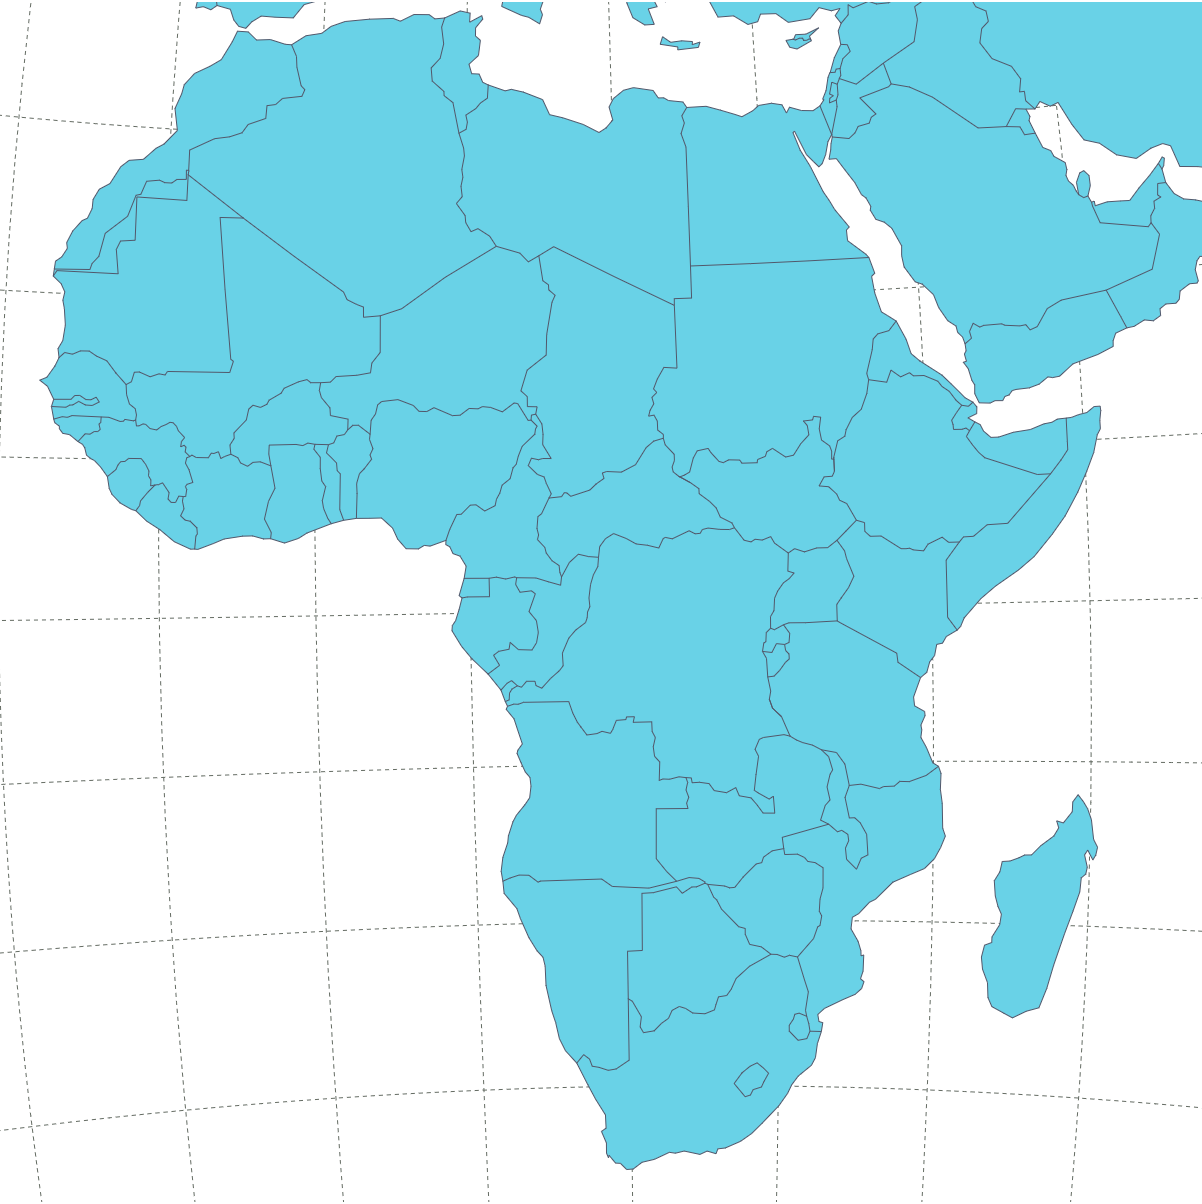 Africa (25+ areas)